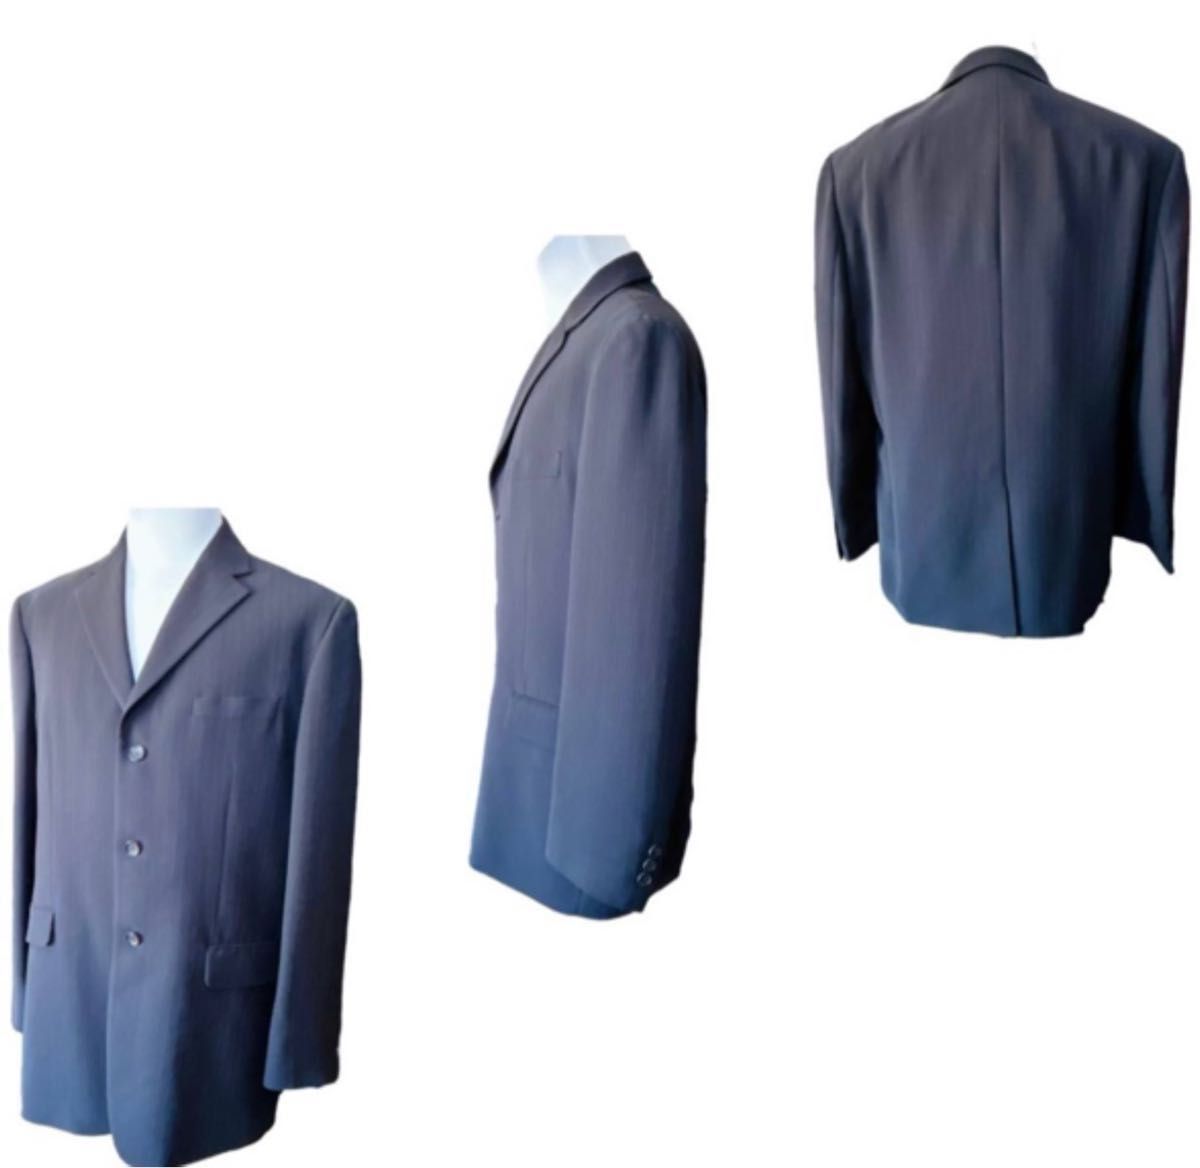 renoma PARIS レノマパリス セットアップスーツ 総裏 紺 未使用 ジャケット スラックス パンツ タグ付 サイズ90